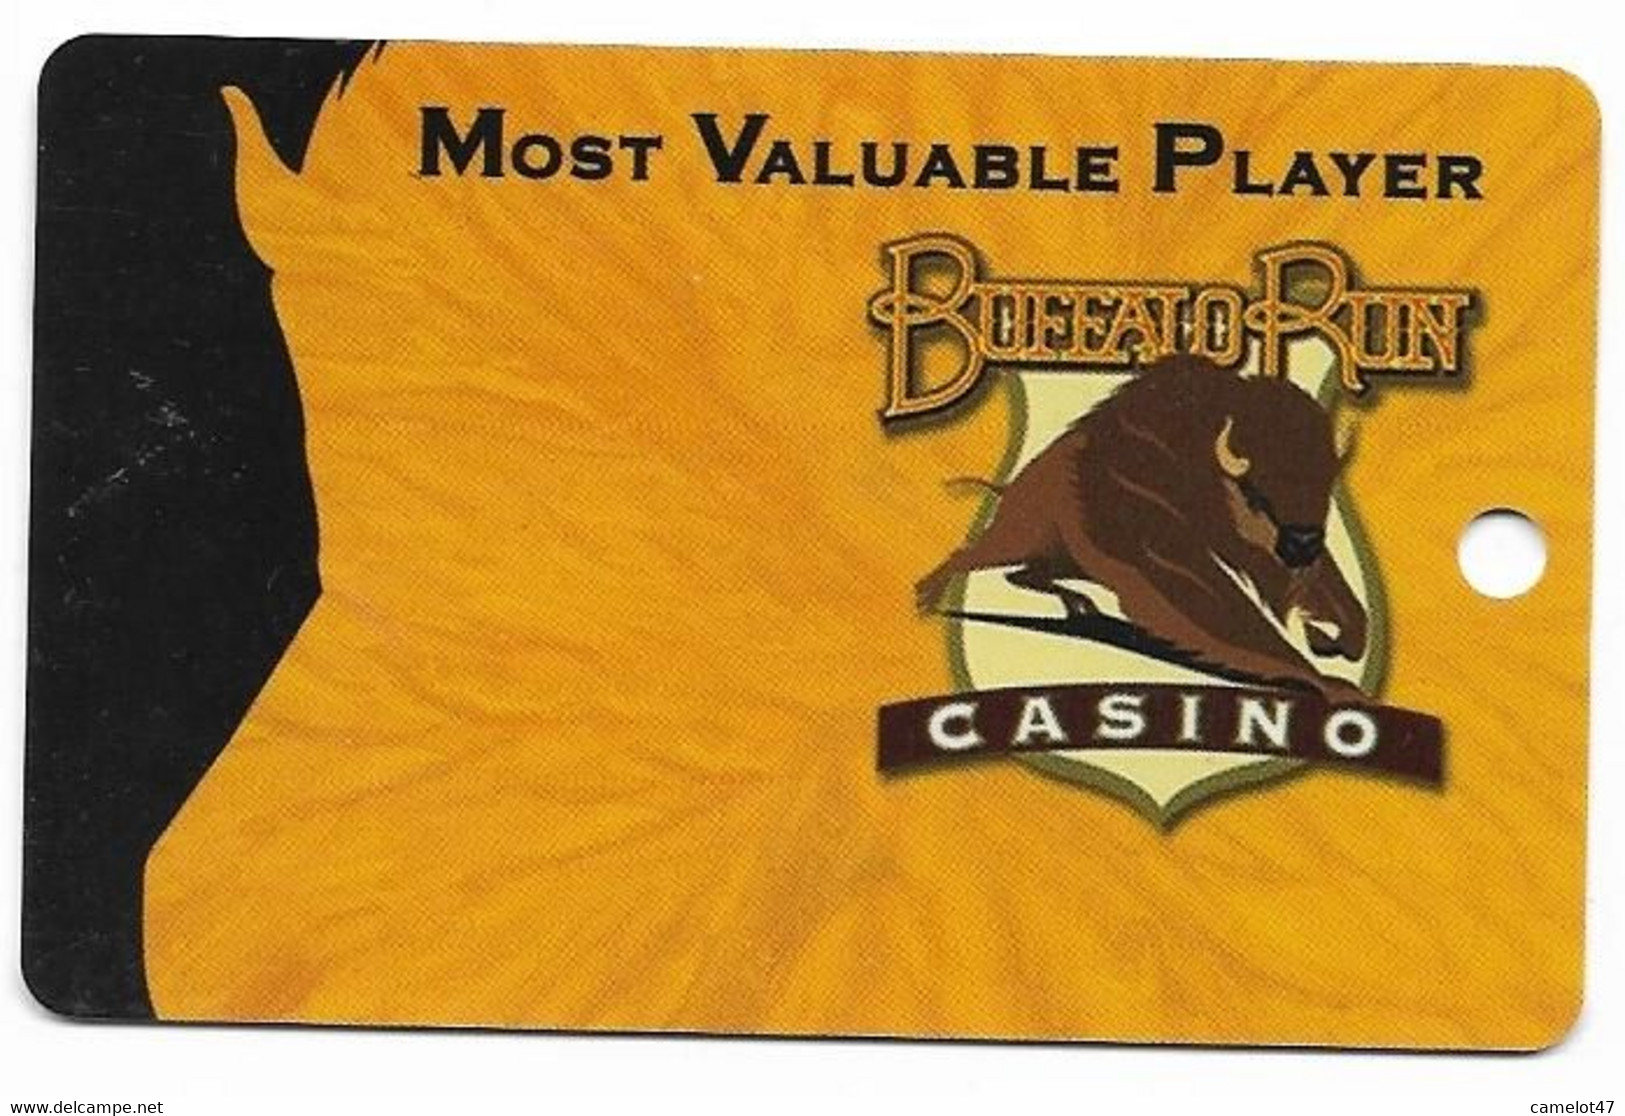 Buffalo Run Casino, Miami, OK, U.S.A., Older Used BLANK Slot Or Player's Card, # Buffalorun-3blank - Casino Cards